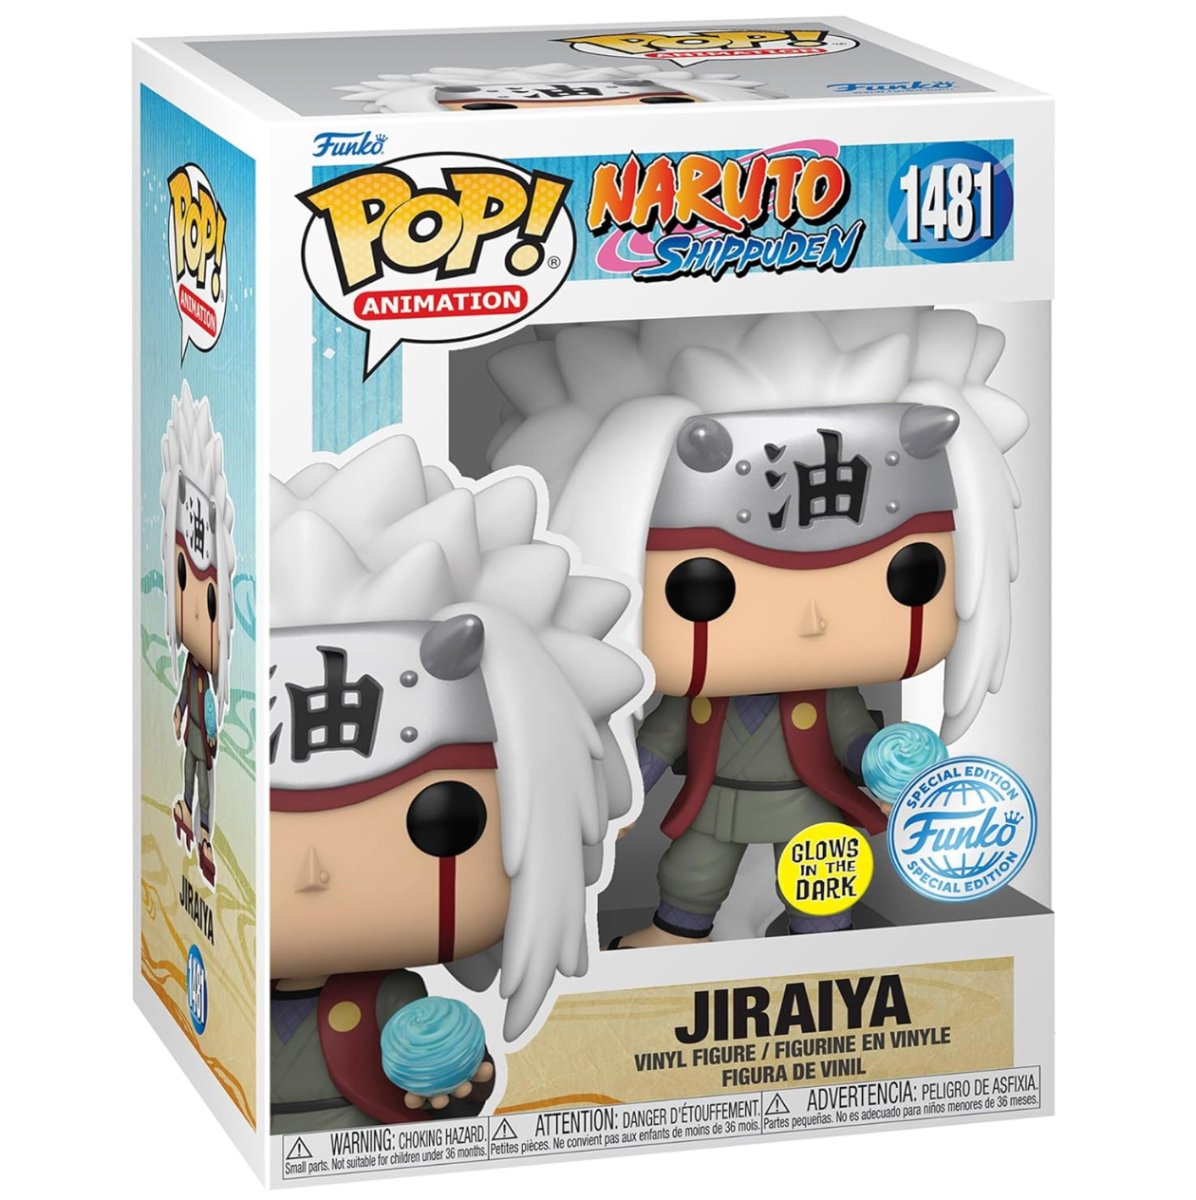 Naruto Shippuden - Jiraiya [Rasengan] (GITD Special Edition) #1481 - Funko Pop! Vinyl Anime - Persona Toys